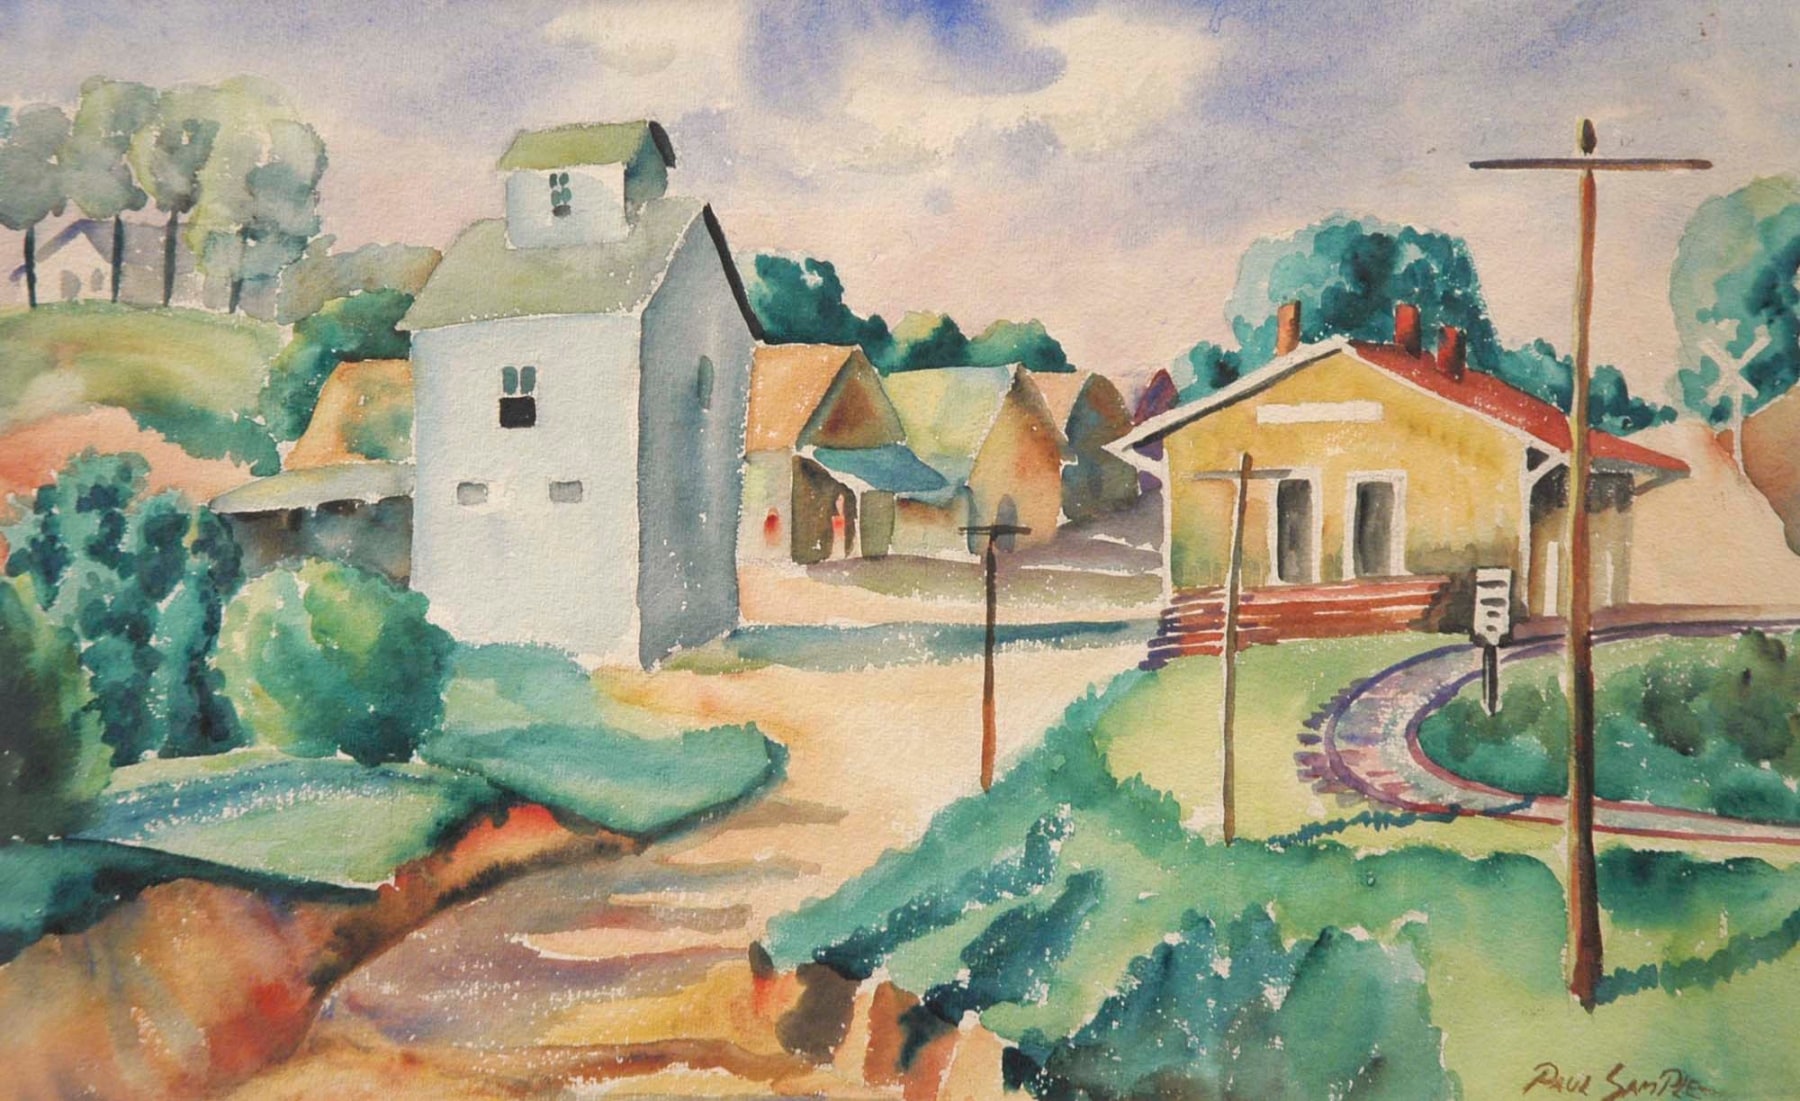 Paul Sample (1896-1947), Small Town Scene